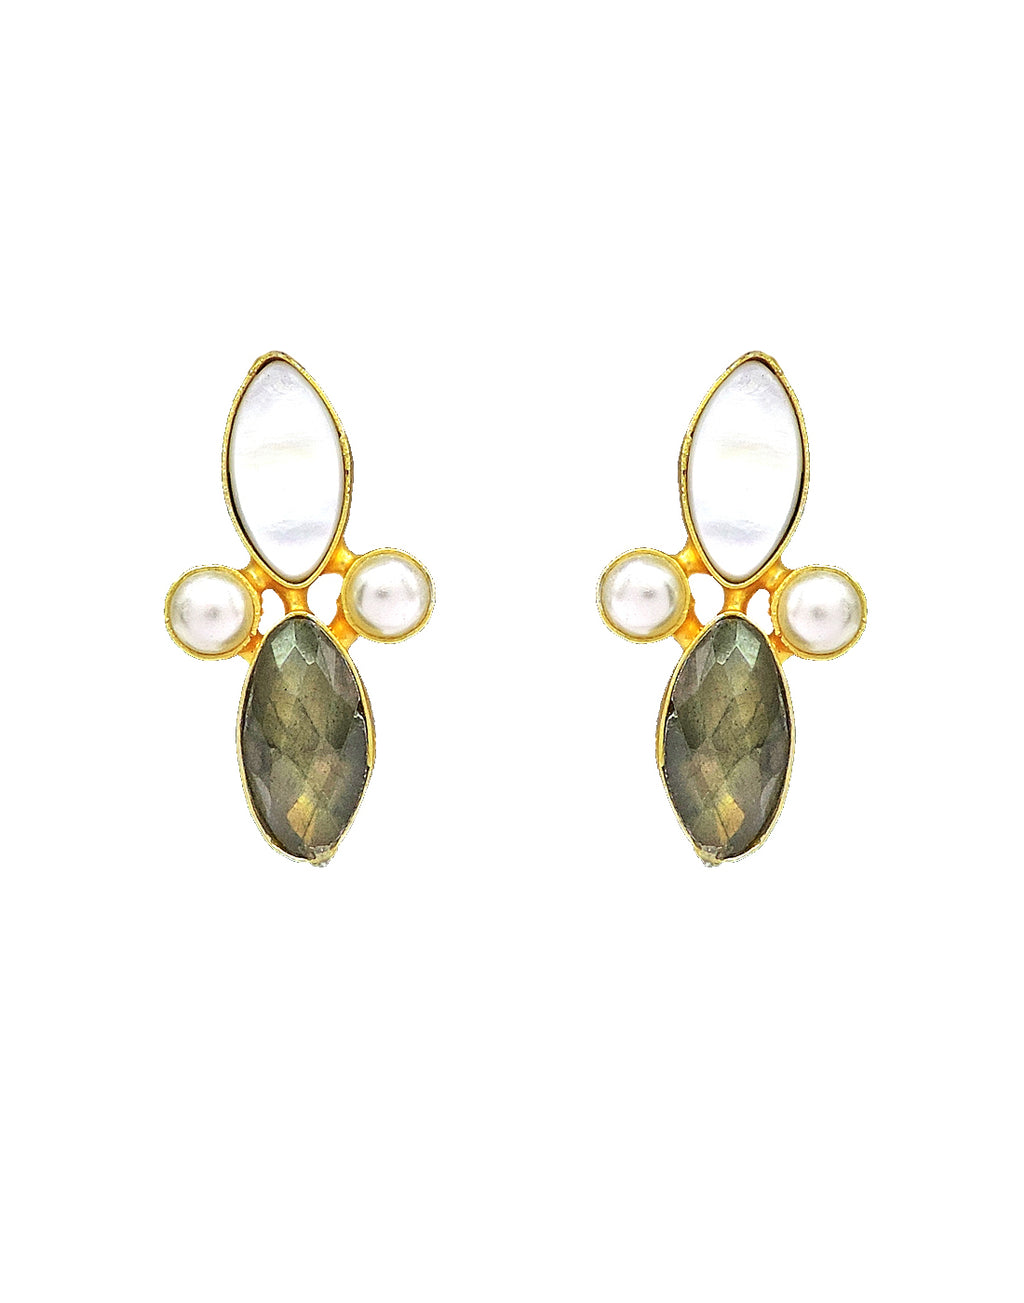 Pearl & Labradorite Earrings - Statement Earrings - Gold-Plated & Hypoallergenic Jewellery - Made in India - Dubai Jewellery - Dori